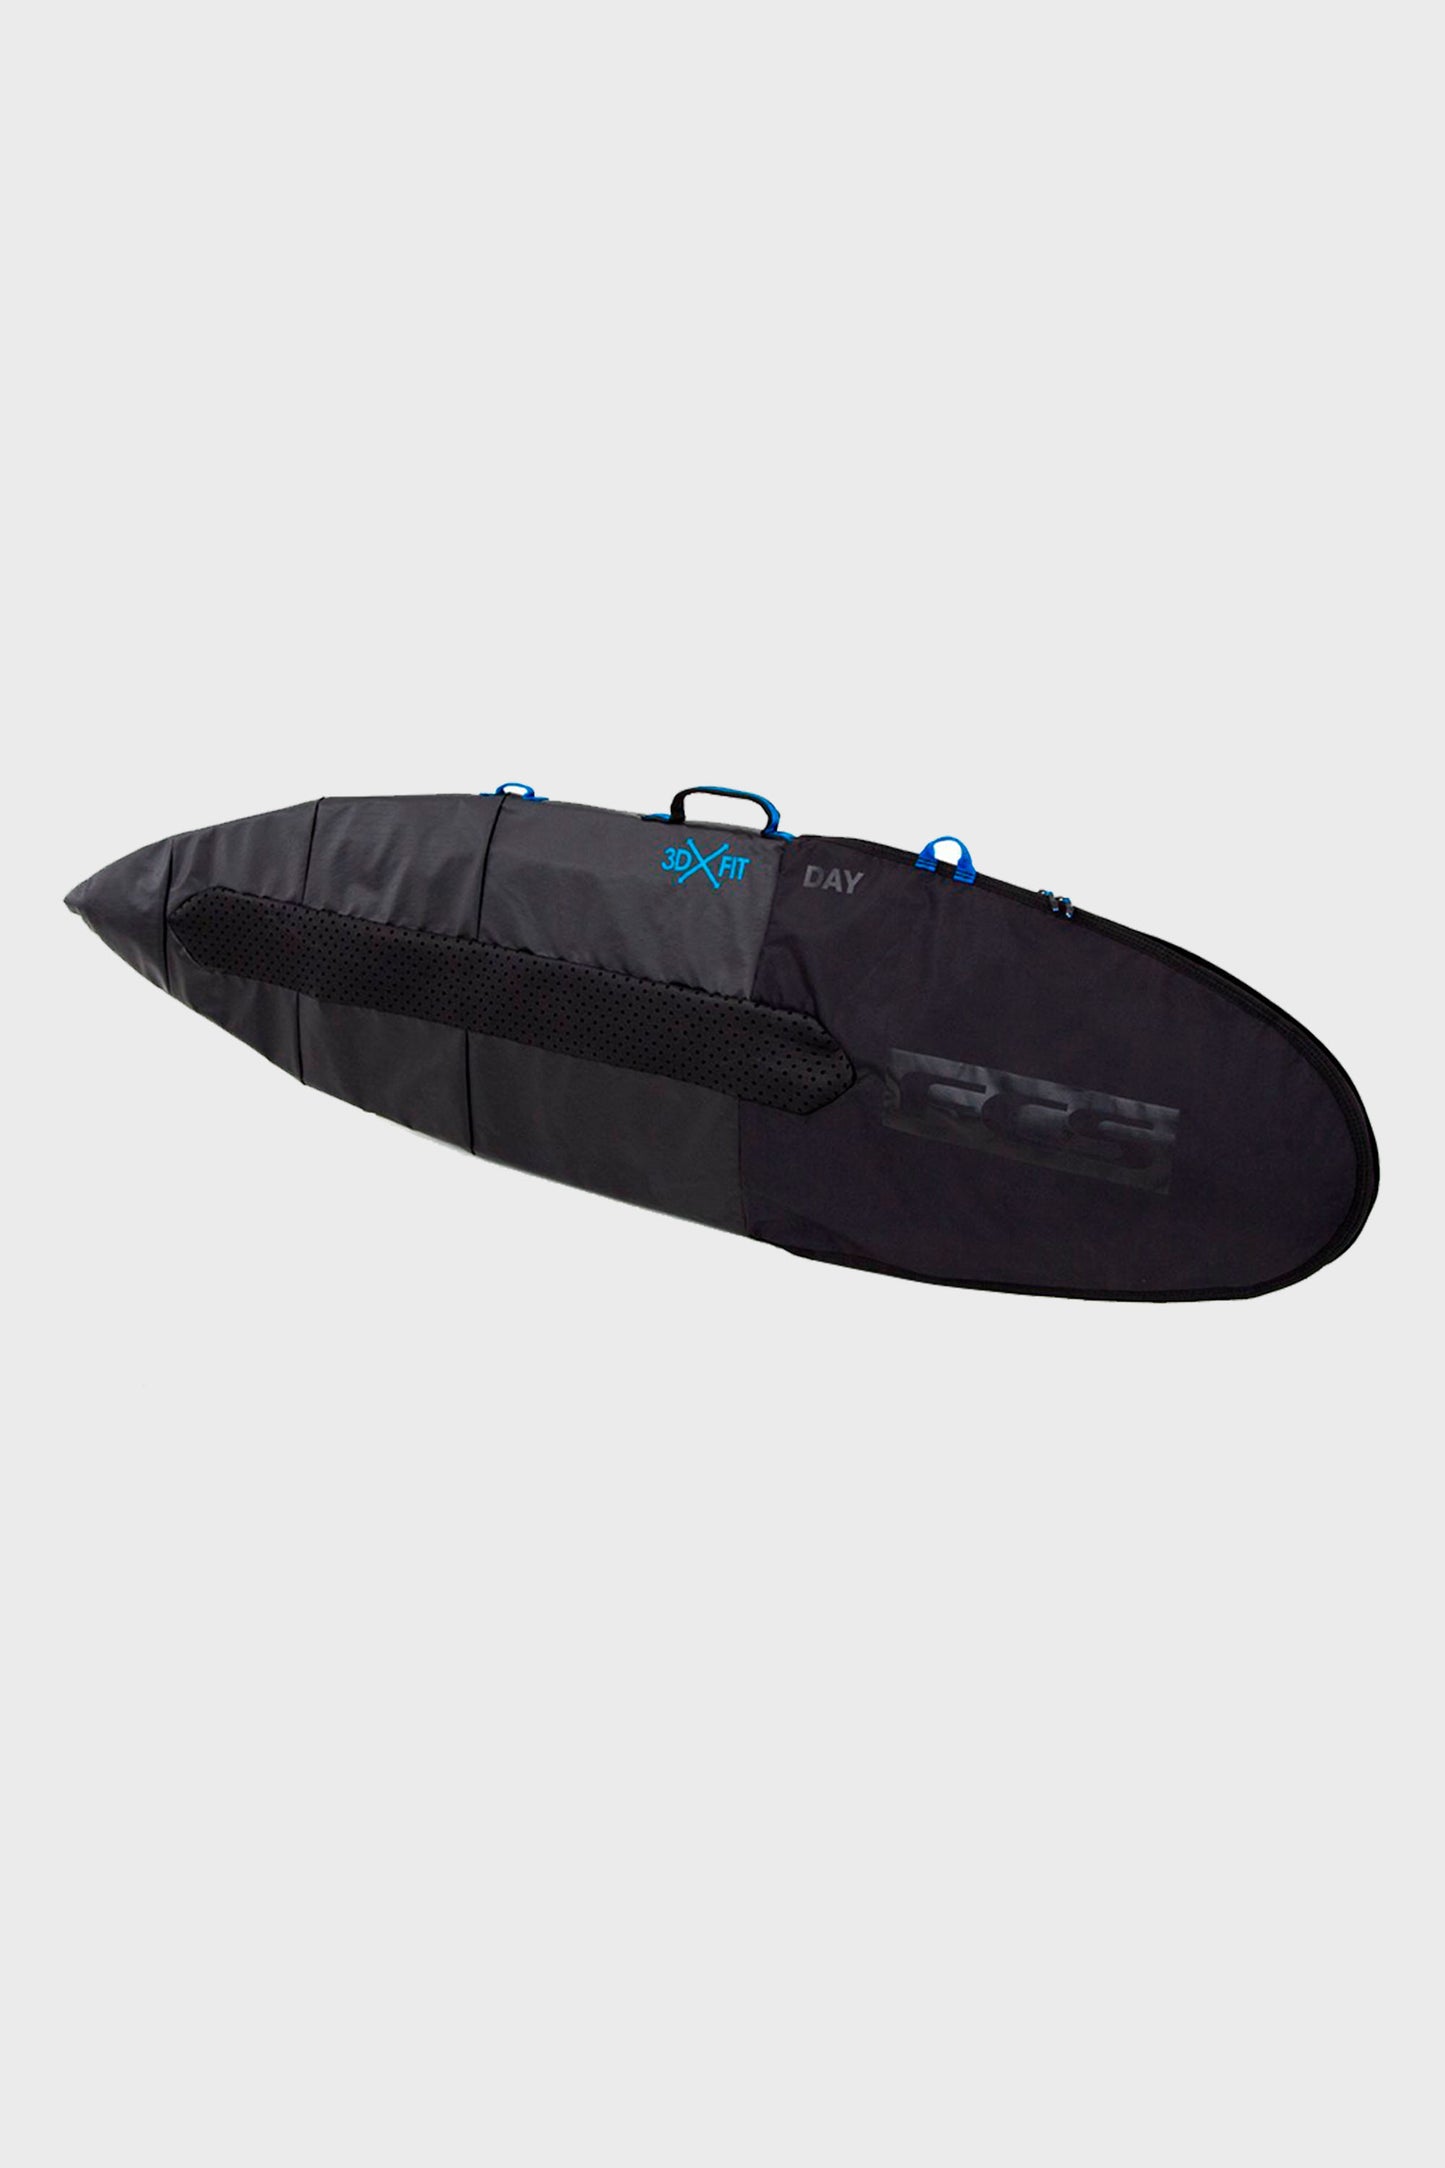     Pukas-Surf-Shop-FCS-Boardbags-Day-all-purpose-5.6